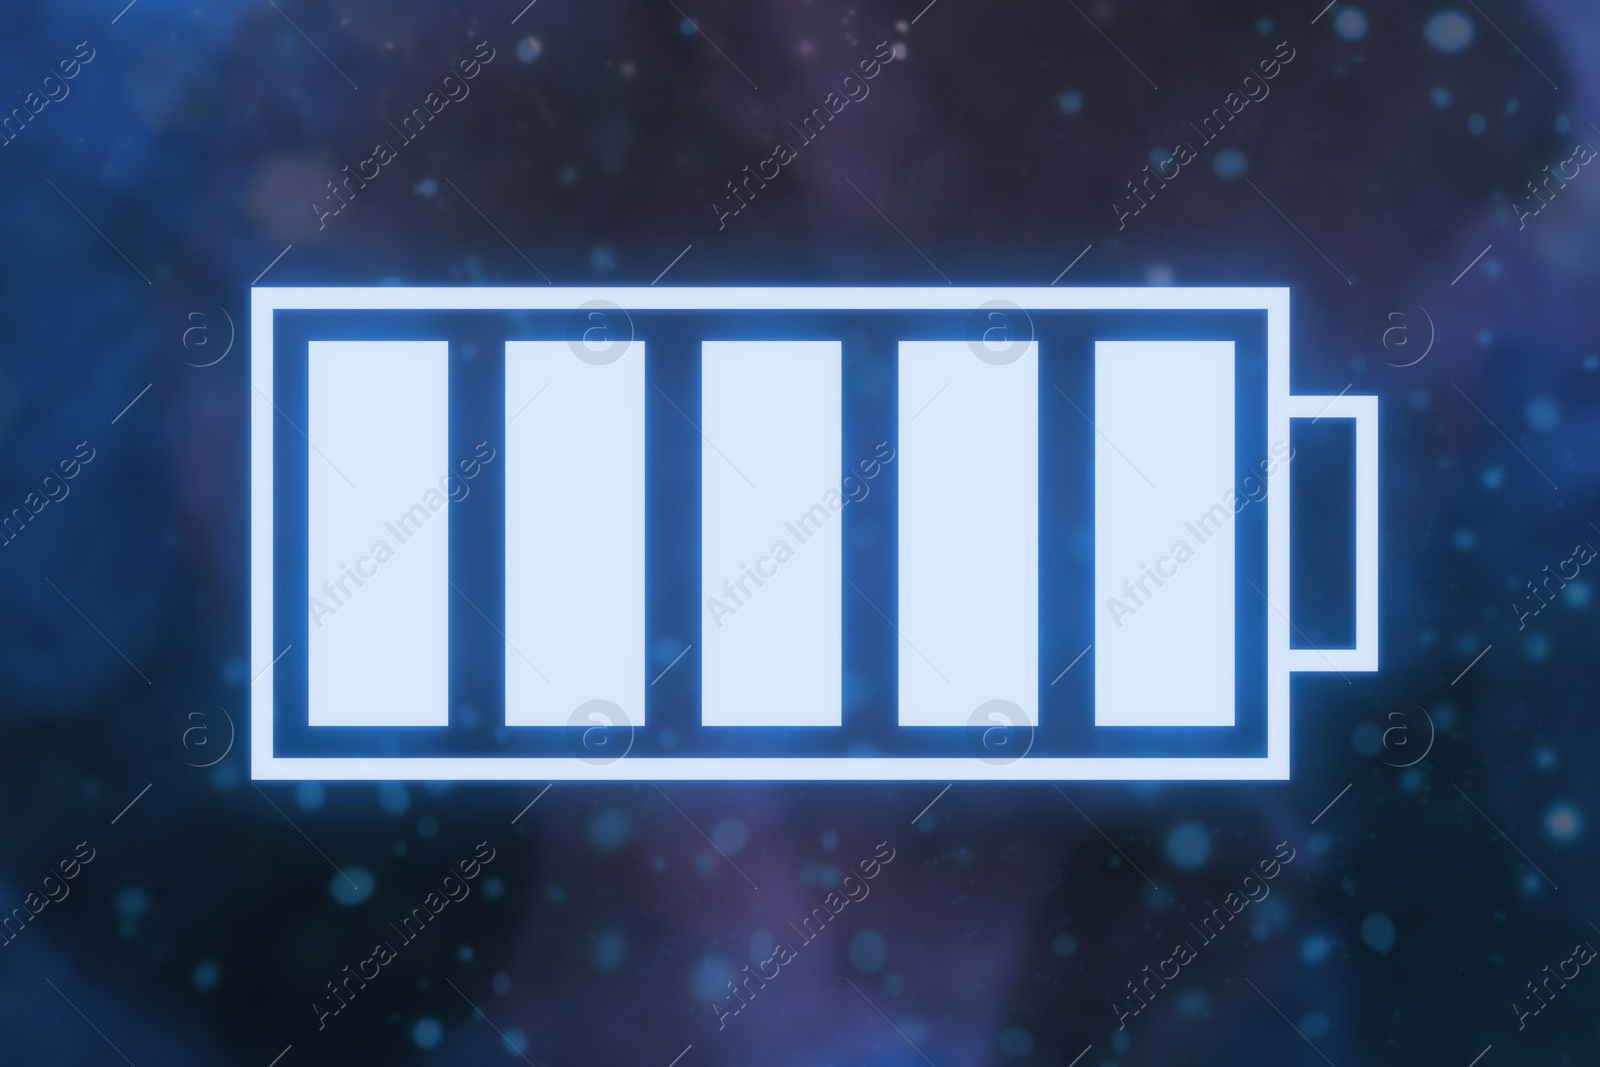 Illustration of Fully charged battery on blue background. Illustration